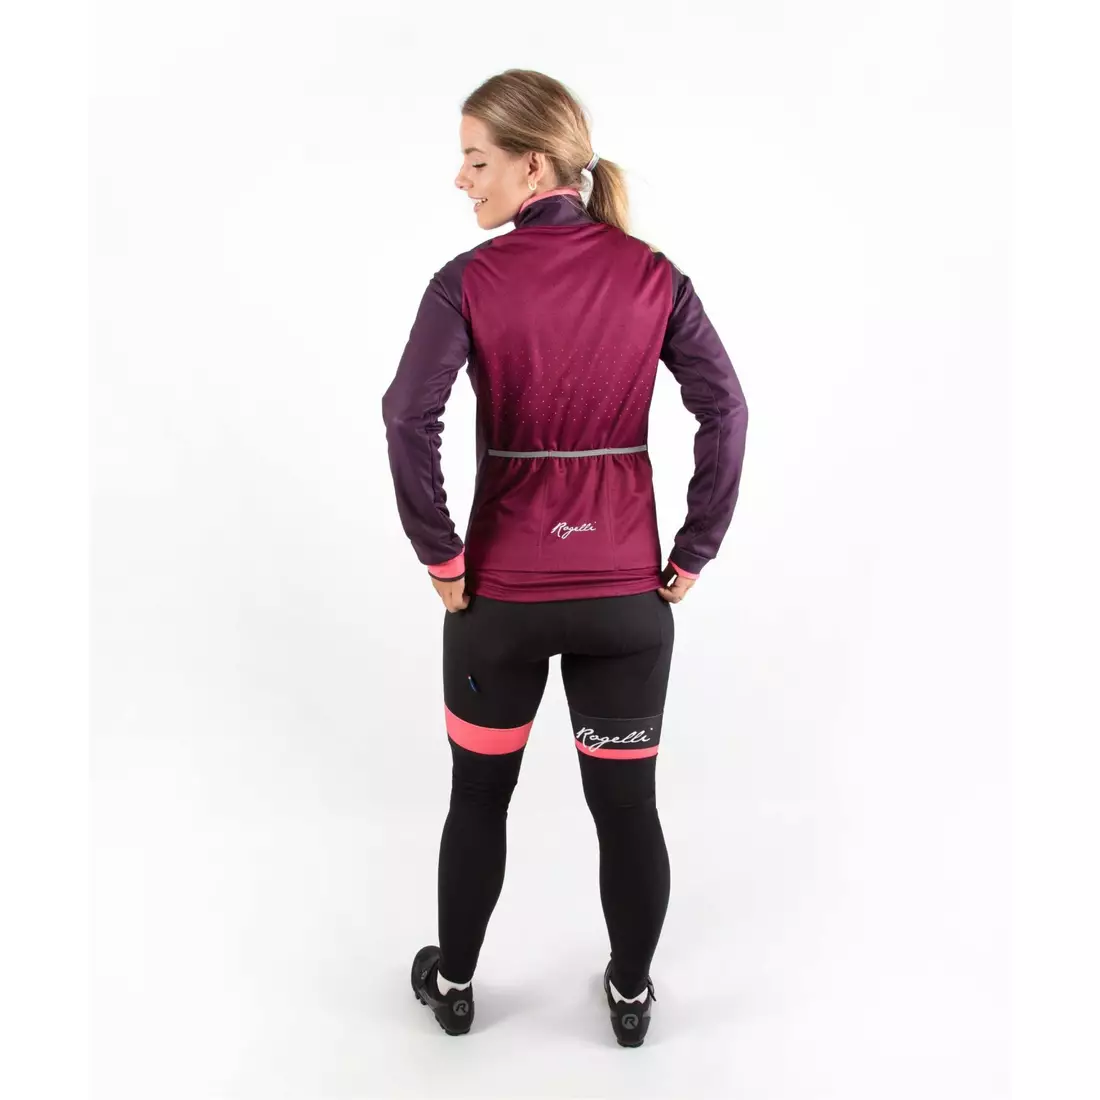 ROGELLI women's winter cycling jacket PRIDE maroona